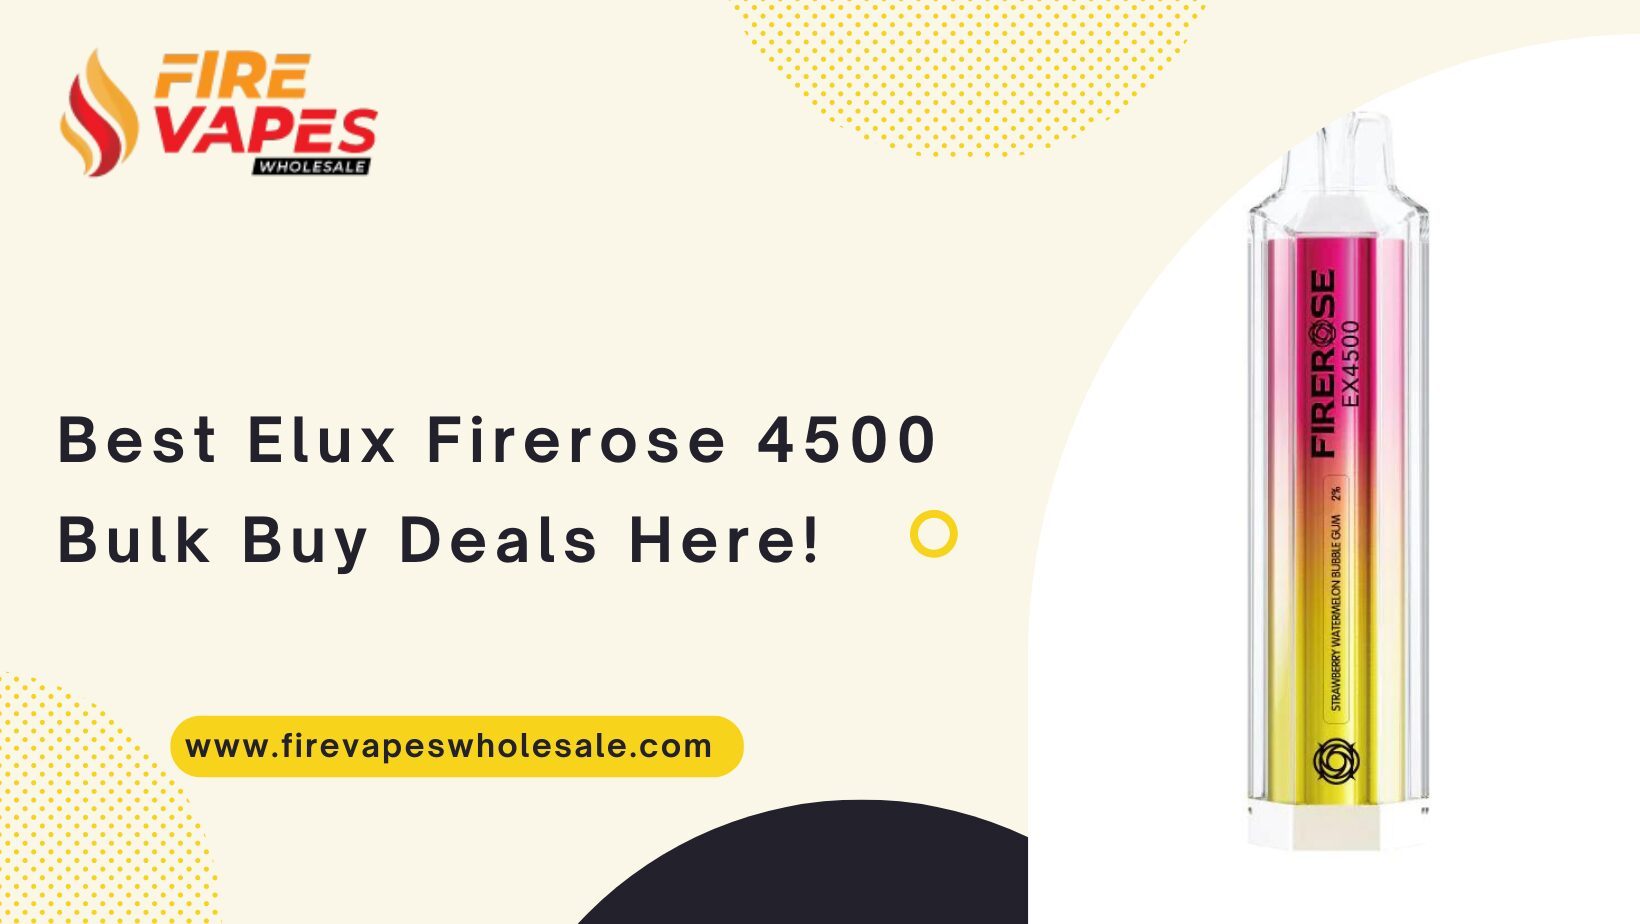 Best Elux Firerose 4500 Bulk Buy Deals Here!